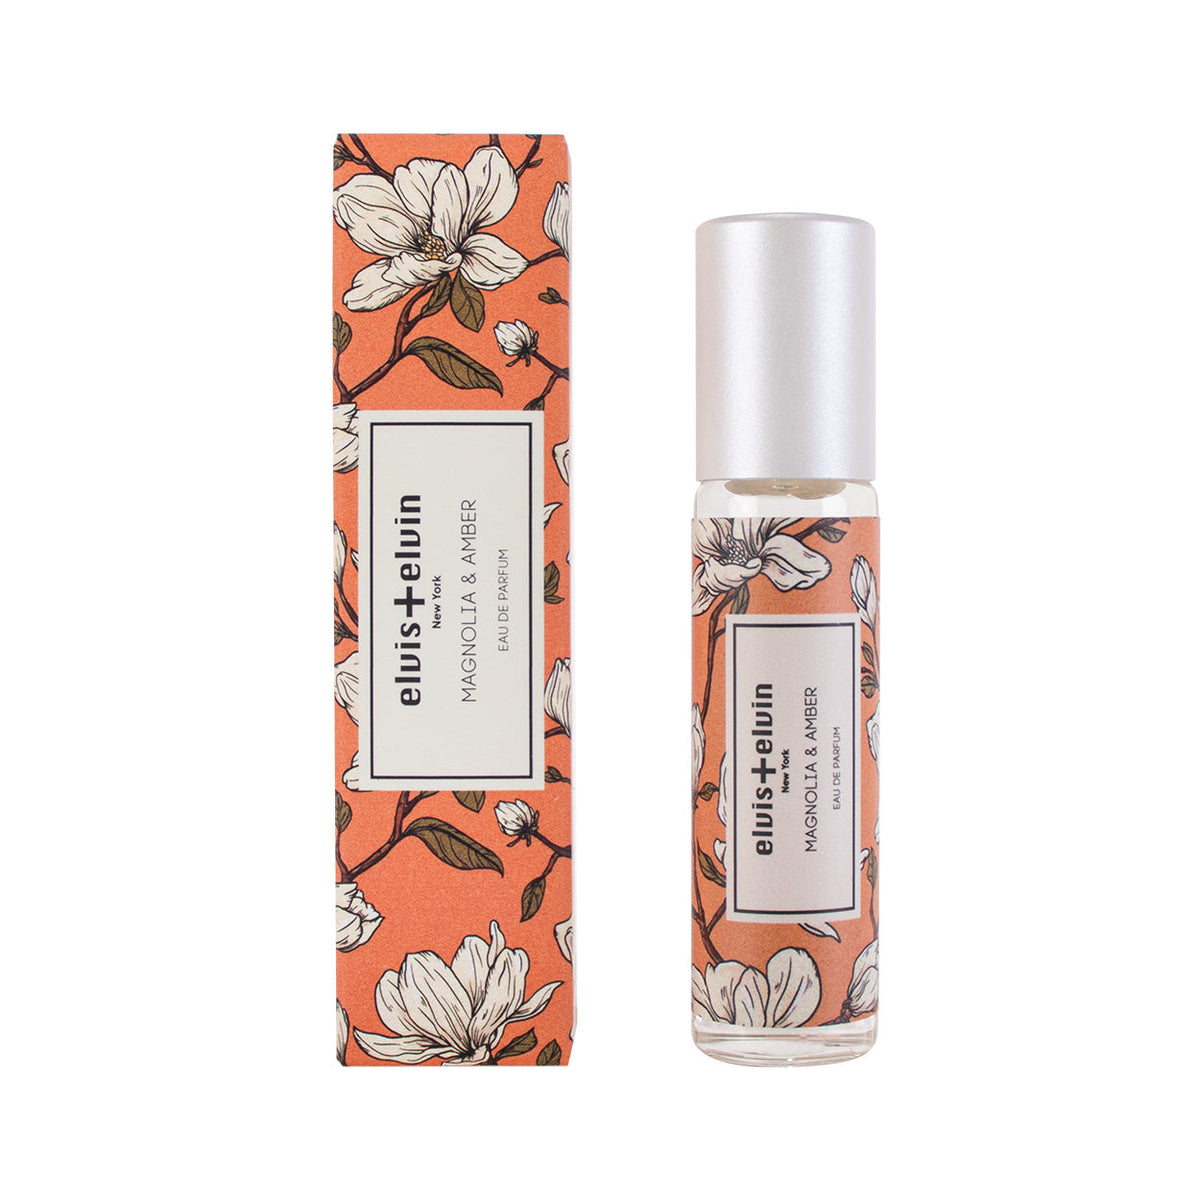 Eau De Parfum - Magnolia & Amber by elvis+elvin